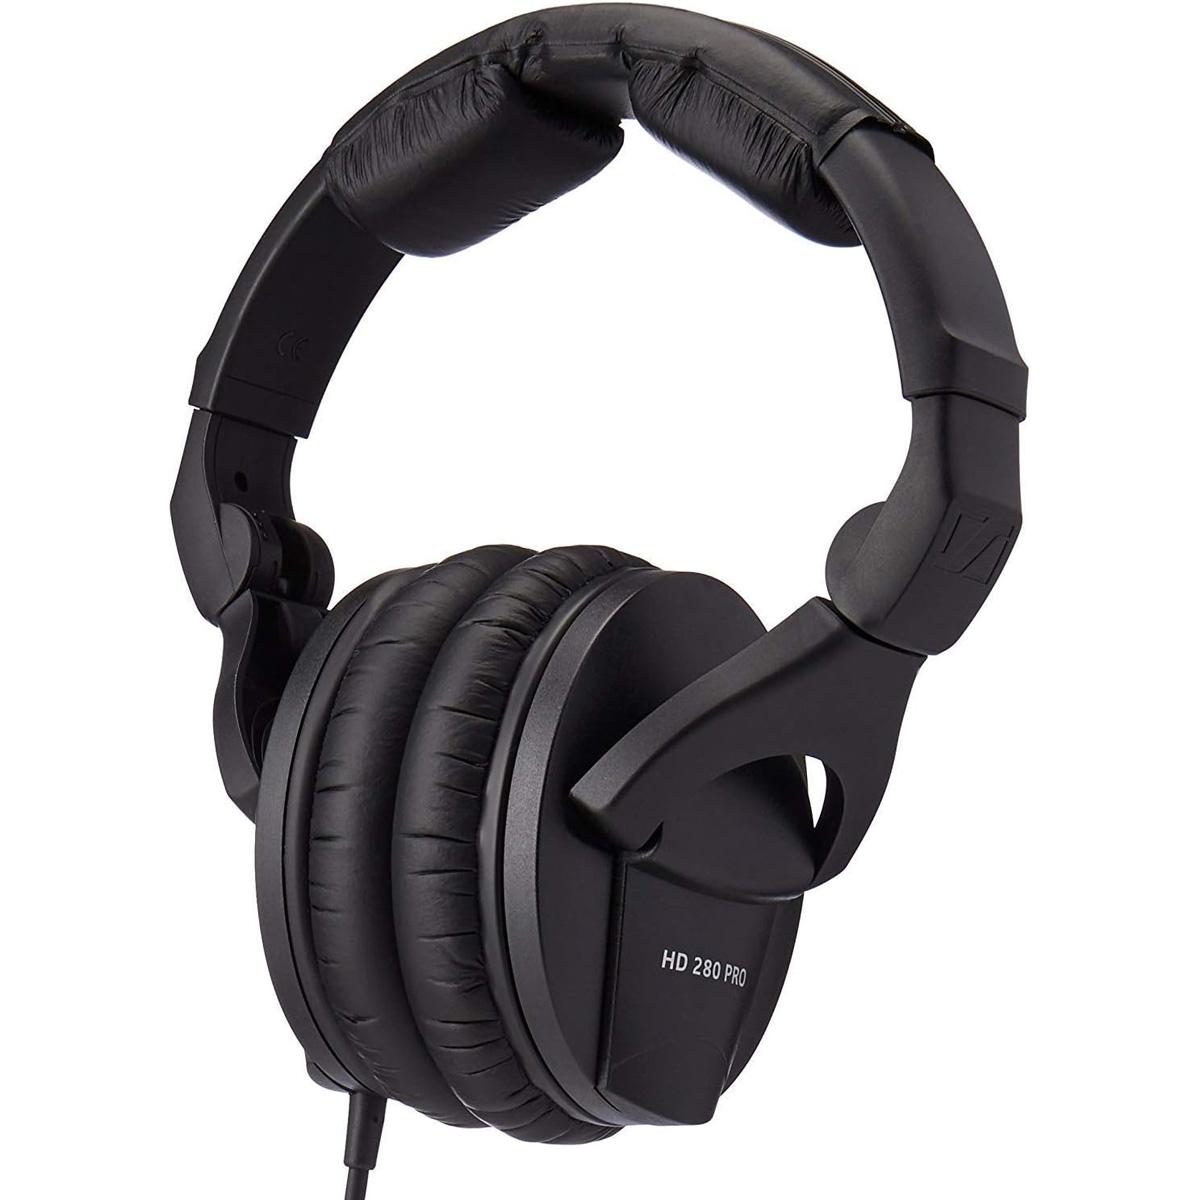 Sennheiser Professional HD 280 PRO Over-Ear Monitoring Headphones for $69 Shipped